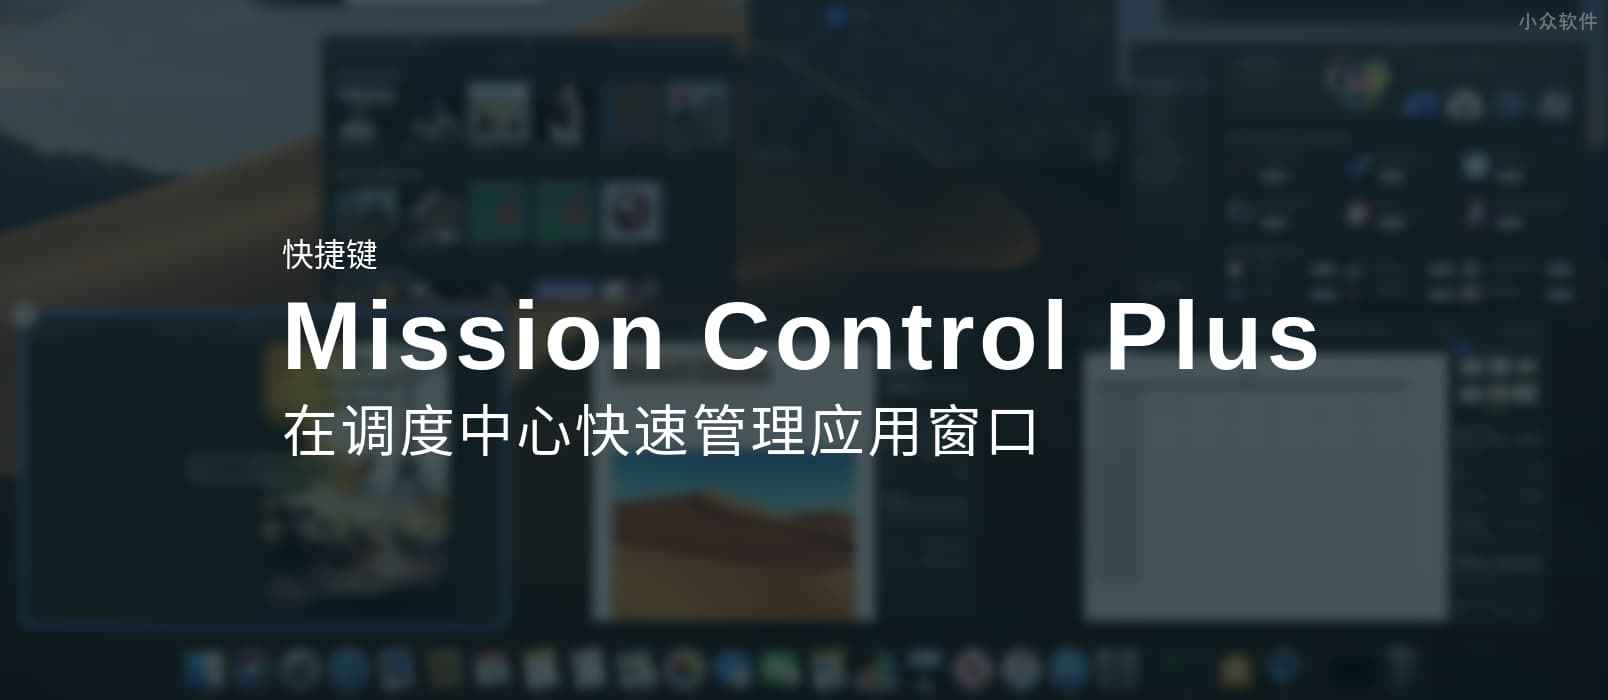 Mission Control Plus – 在 Mac 调度中心 Mission Control 管理应用，并添加快捷键